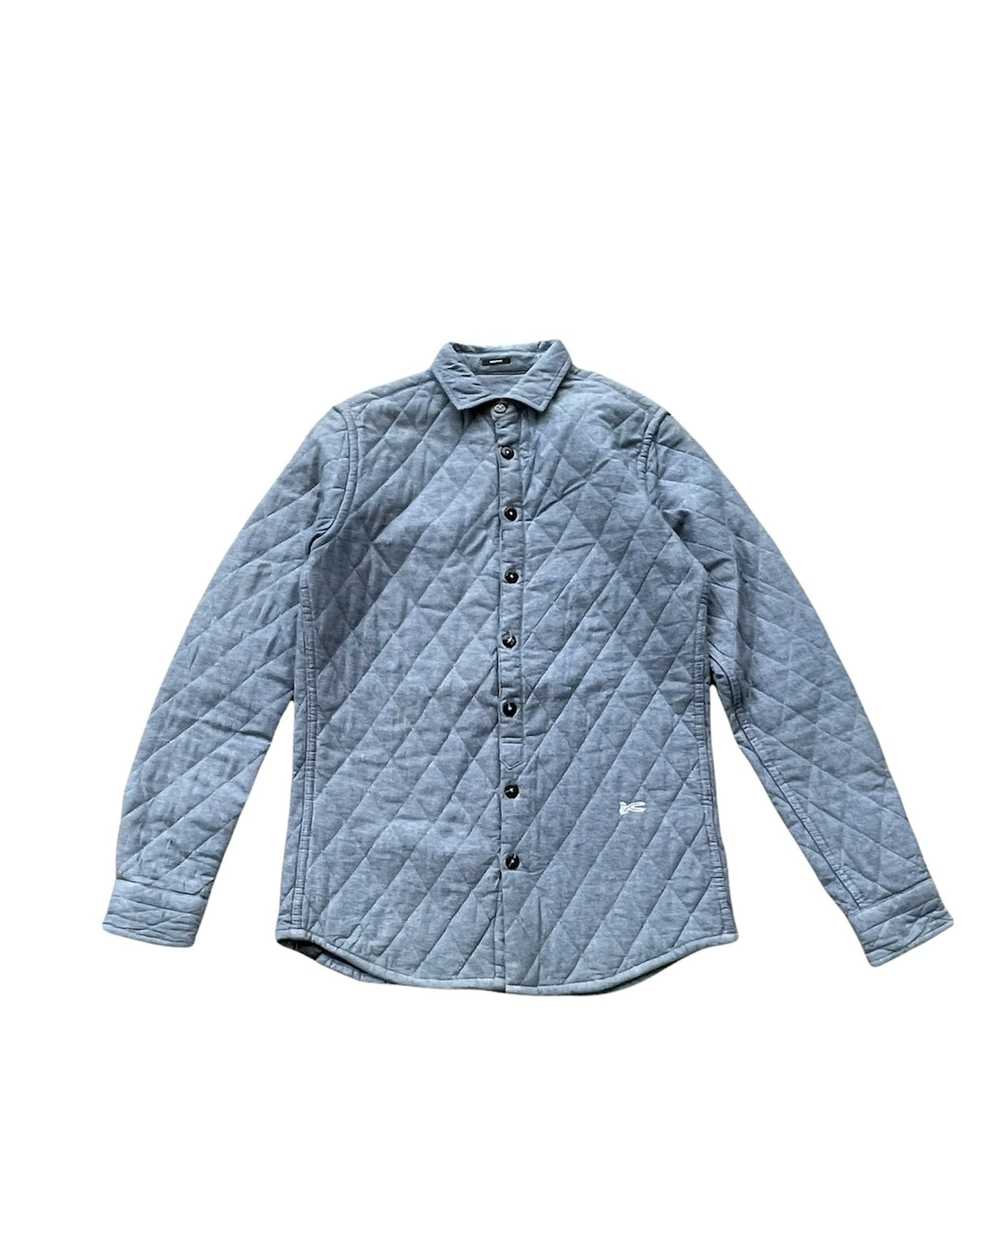 Denham × Designer Denham Diamond Quilted Shirt - image 1